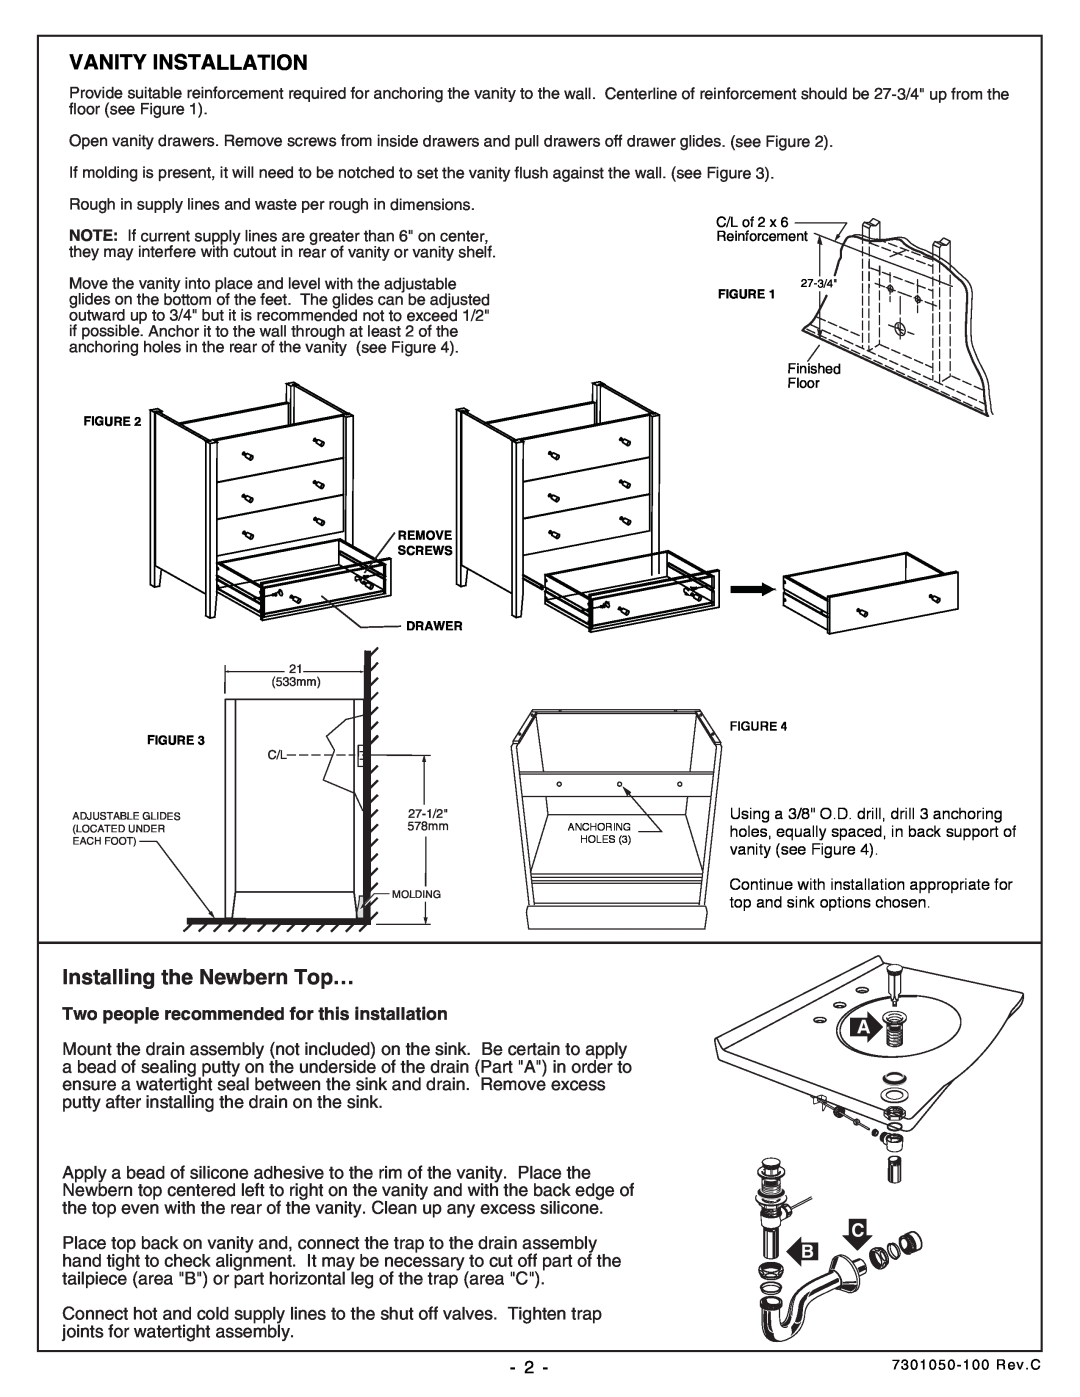 American Standard 7820.800, 9437.200 installation instructions Vanity Installation, Installing the Newbern Top…, A C B 